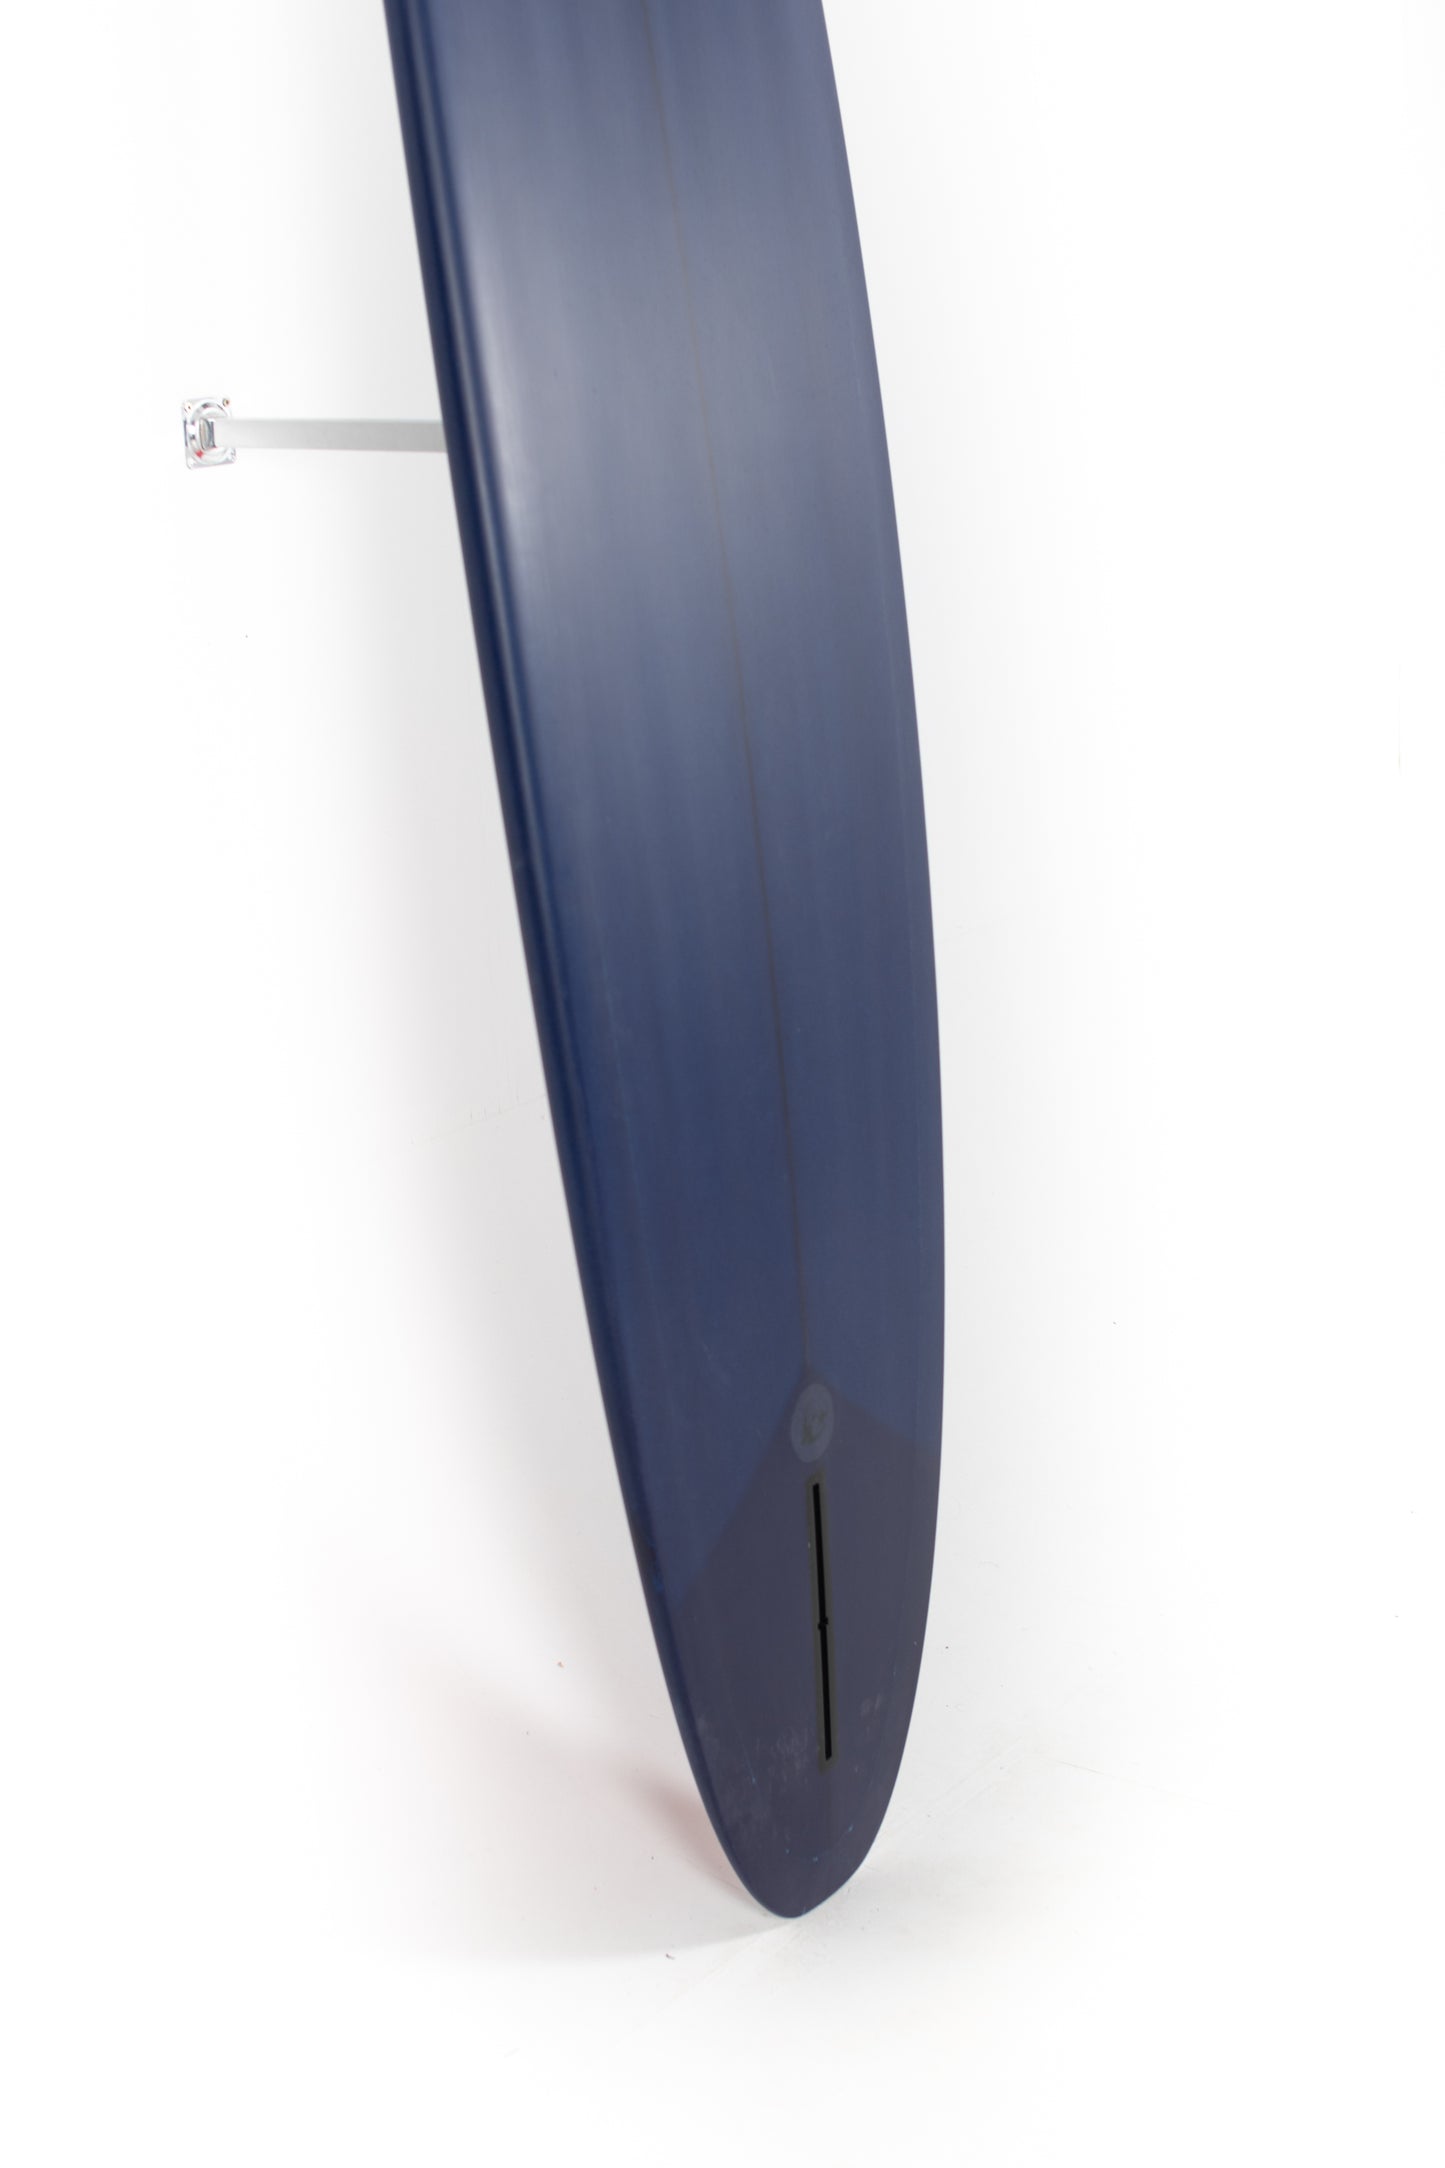 
                  
                    Pukas Surf Shop - McTavish Surfboard - RINCON by Bob McTavish - 7’10” x 21 3/4 x 3 - Ref BM00787
                  
                